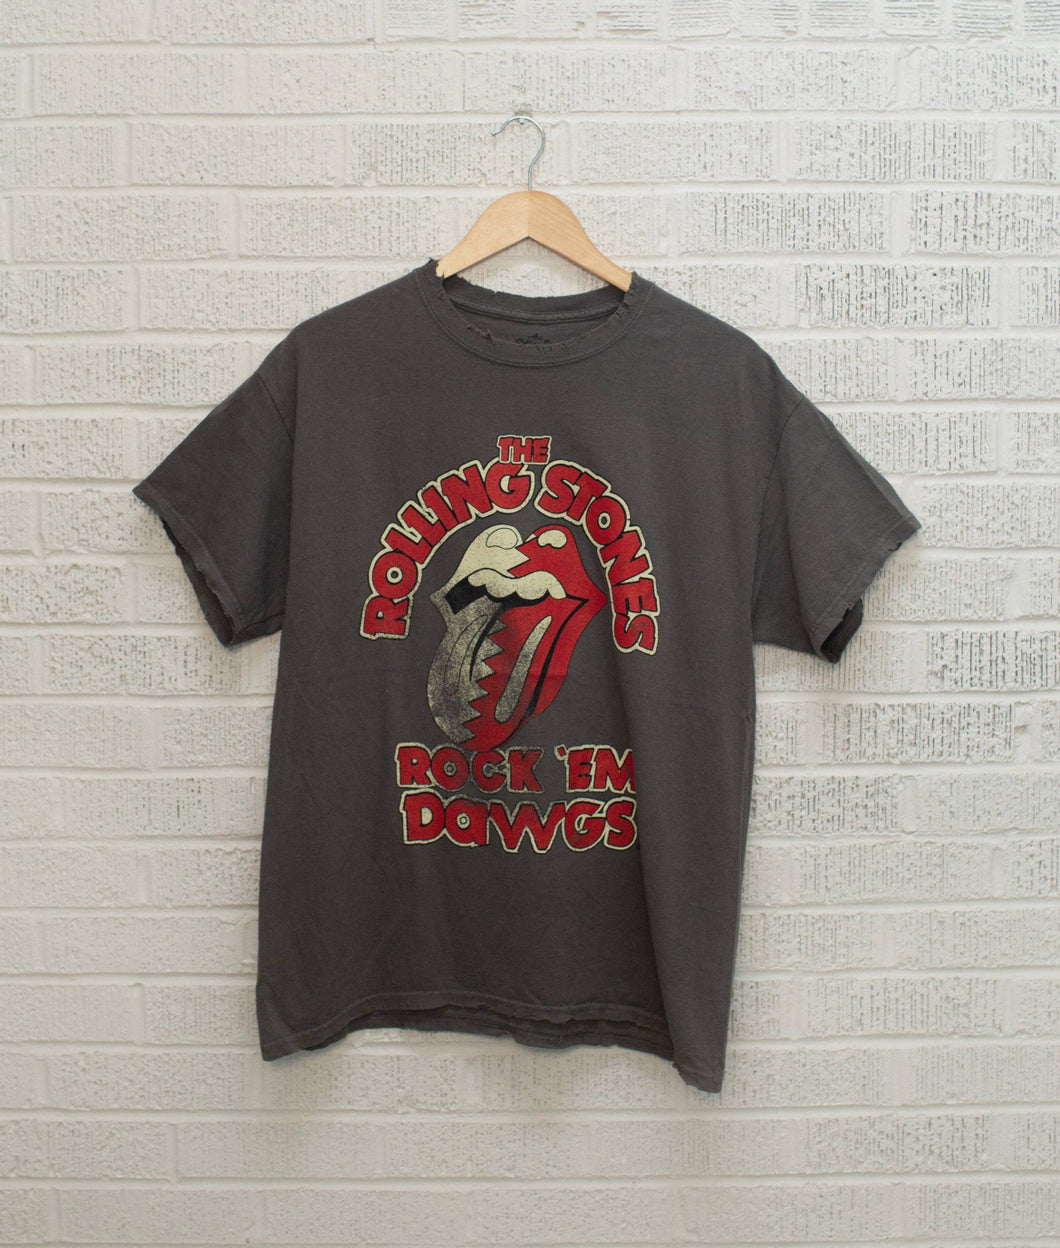 Rock em Dawgs T-shirt